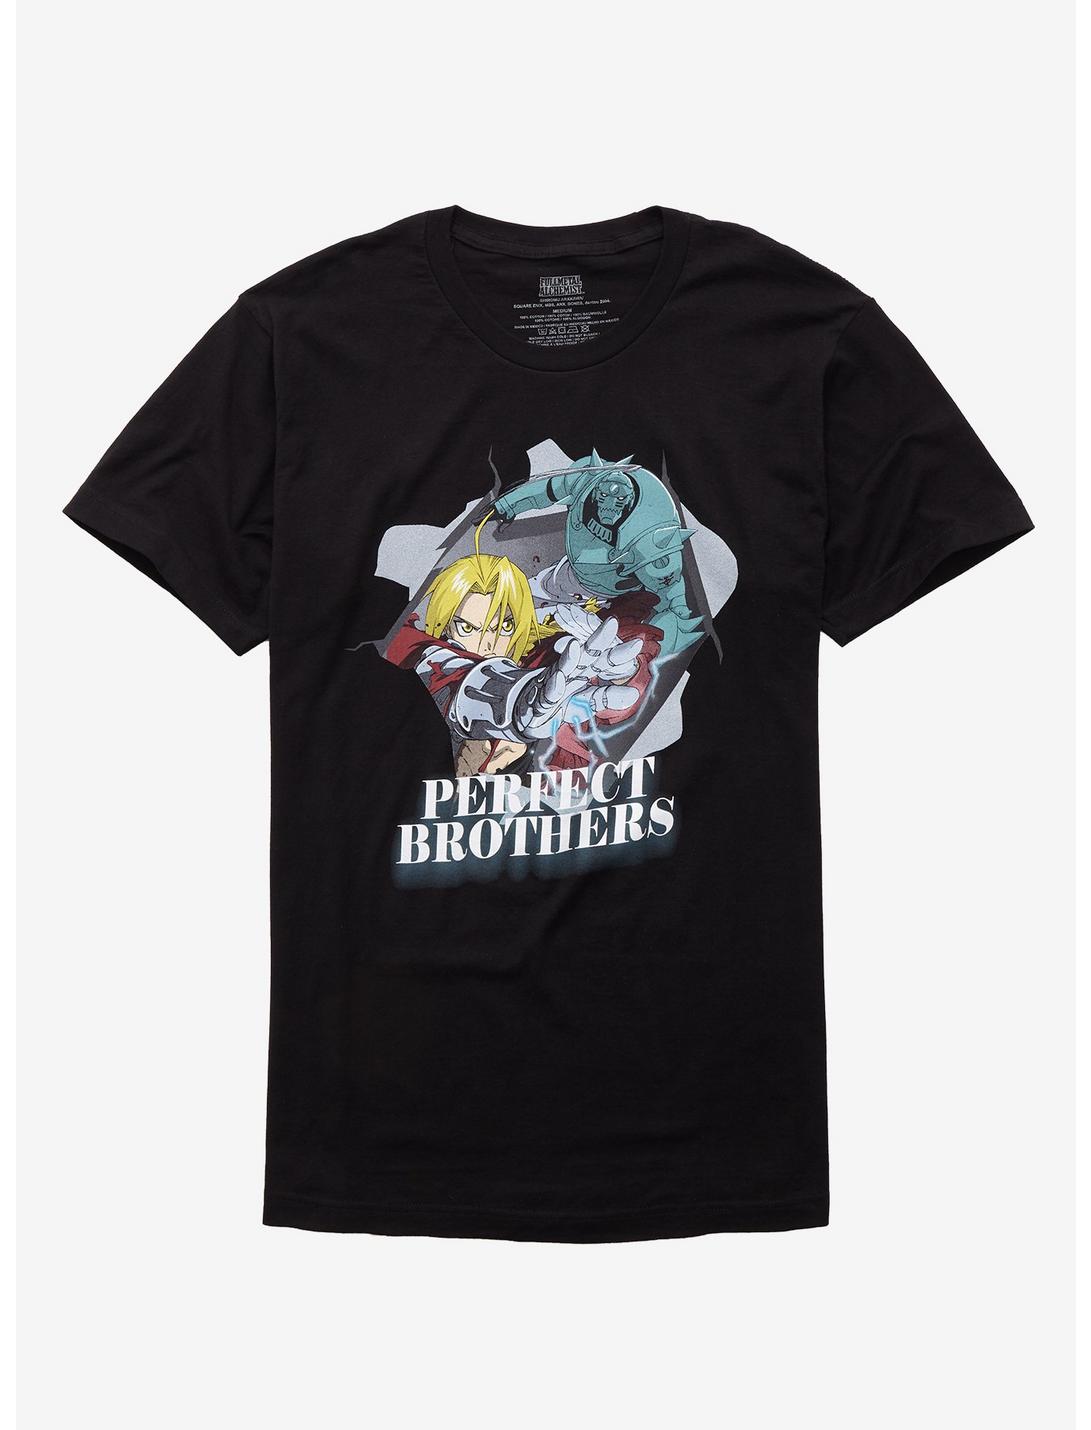 Fullmetal Alchemist Perfect Brothers T-Shirt, BLACK, hi-res